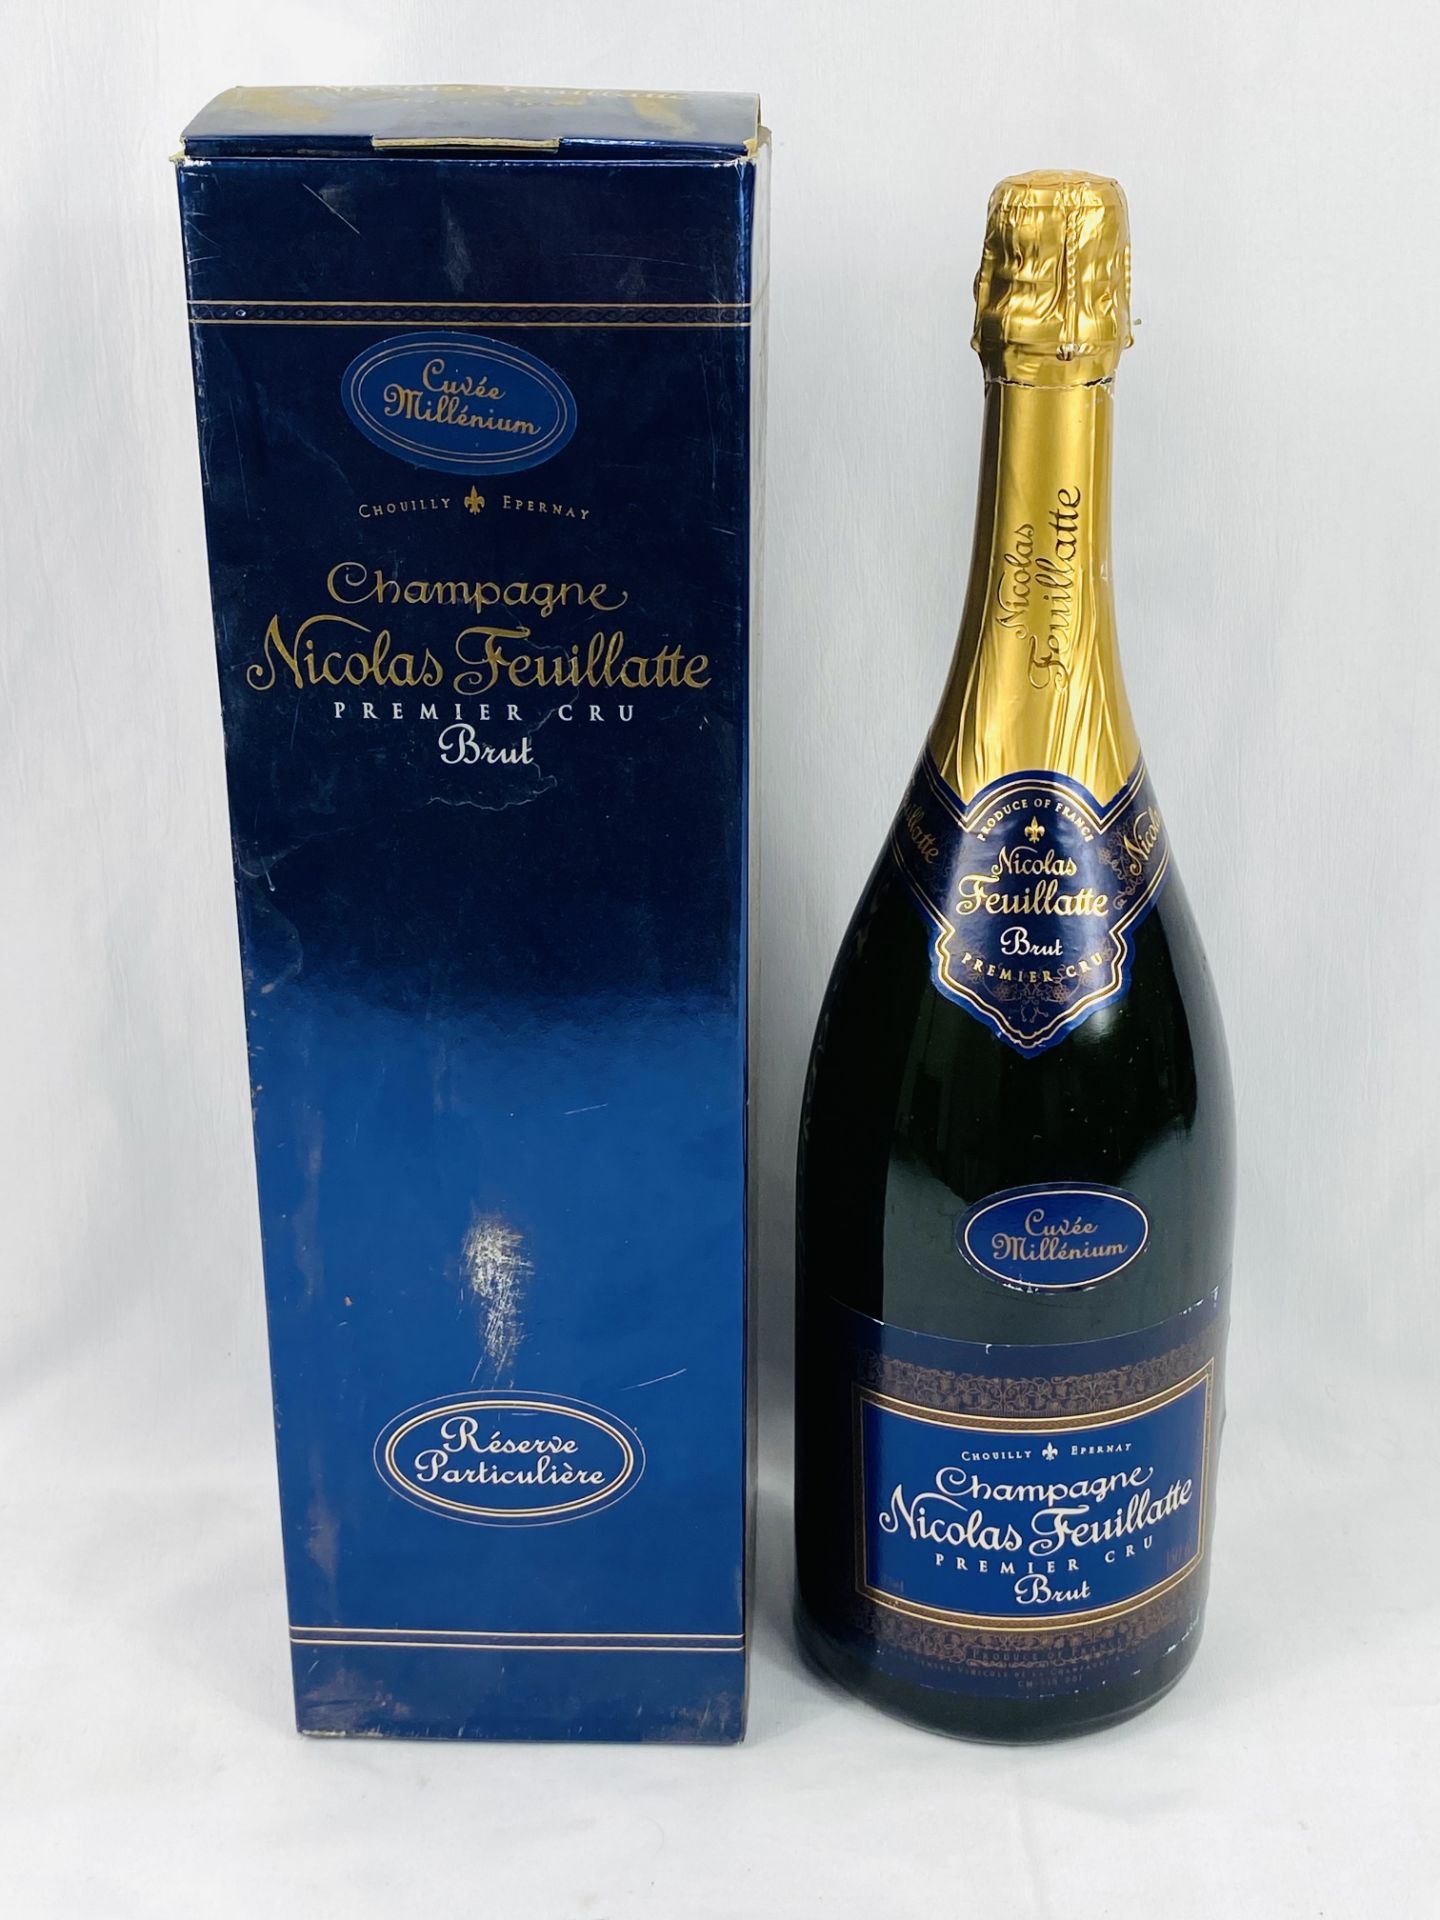 Nicolas Feuillatte Premier cru champagne